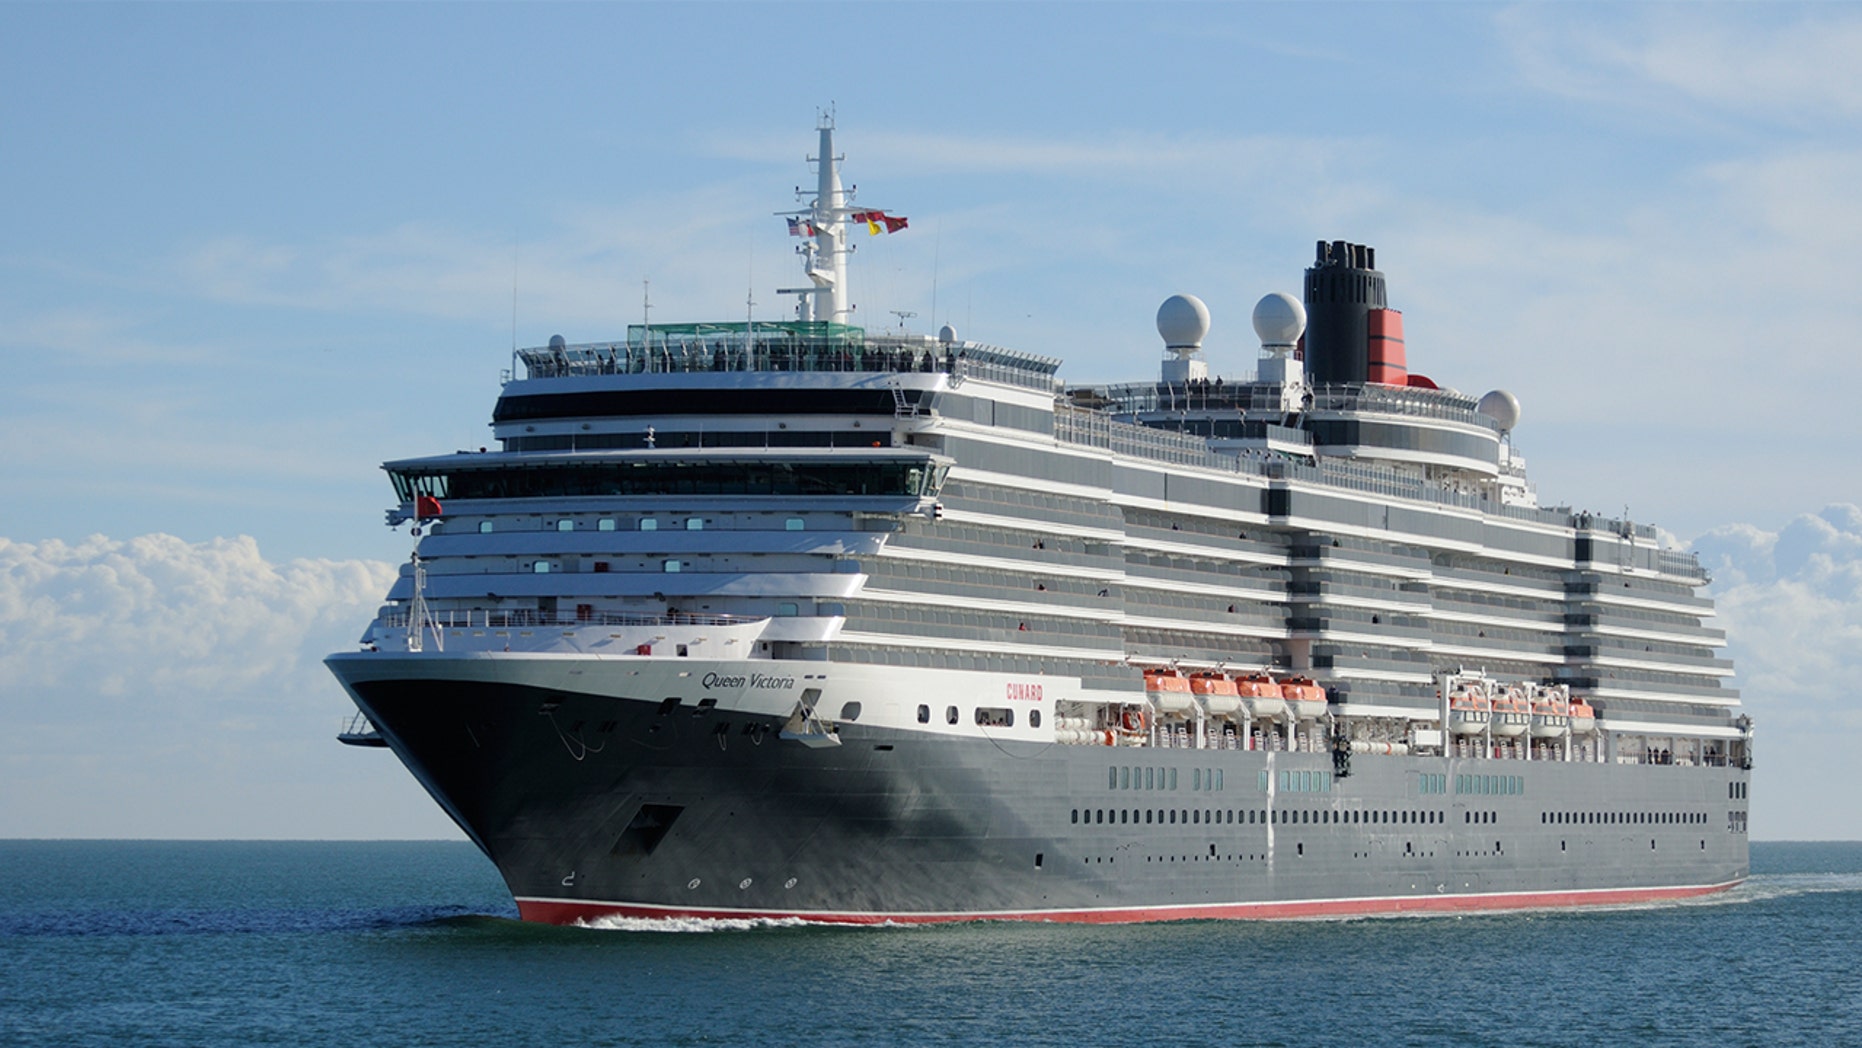 Princess, Cunard cruise lines face backlash after charging passengers